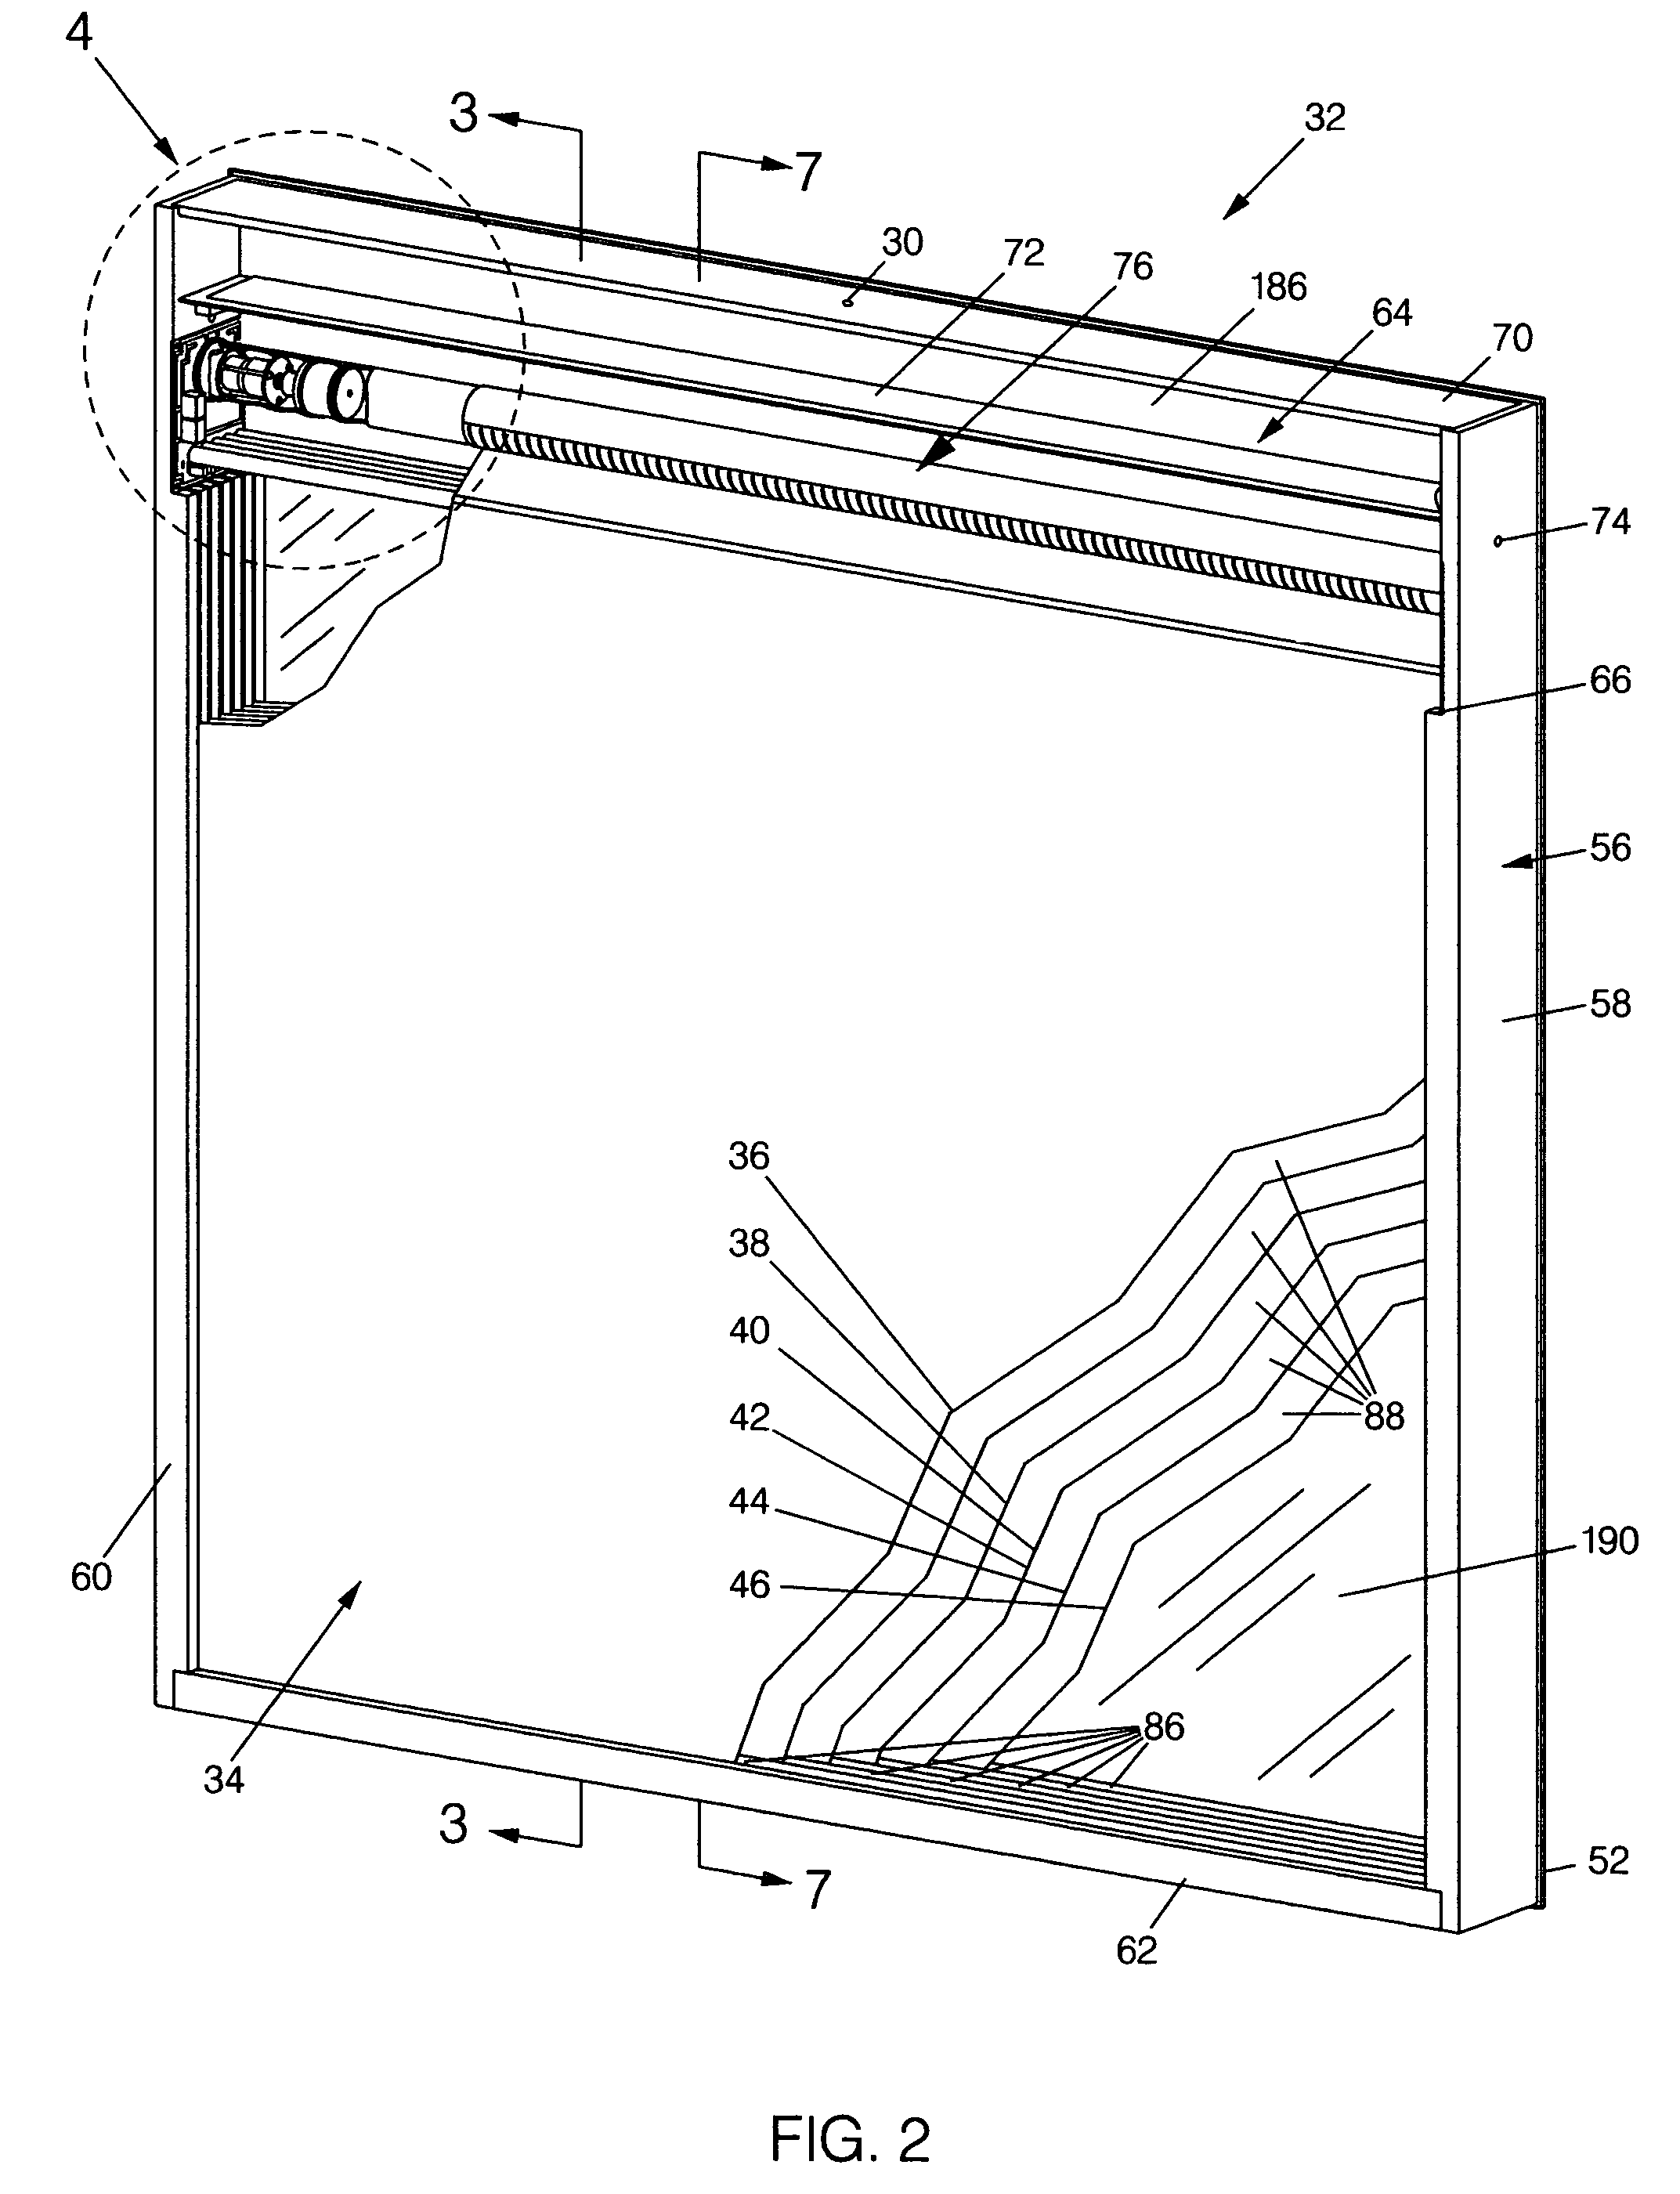 Multi-layered film window system